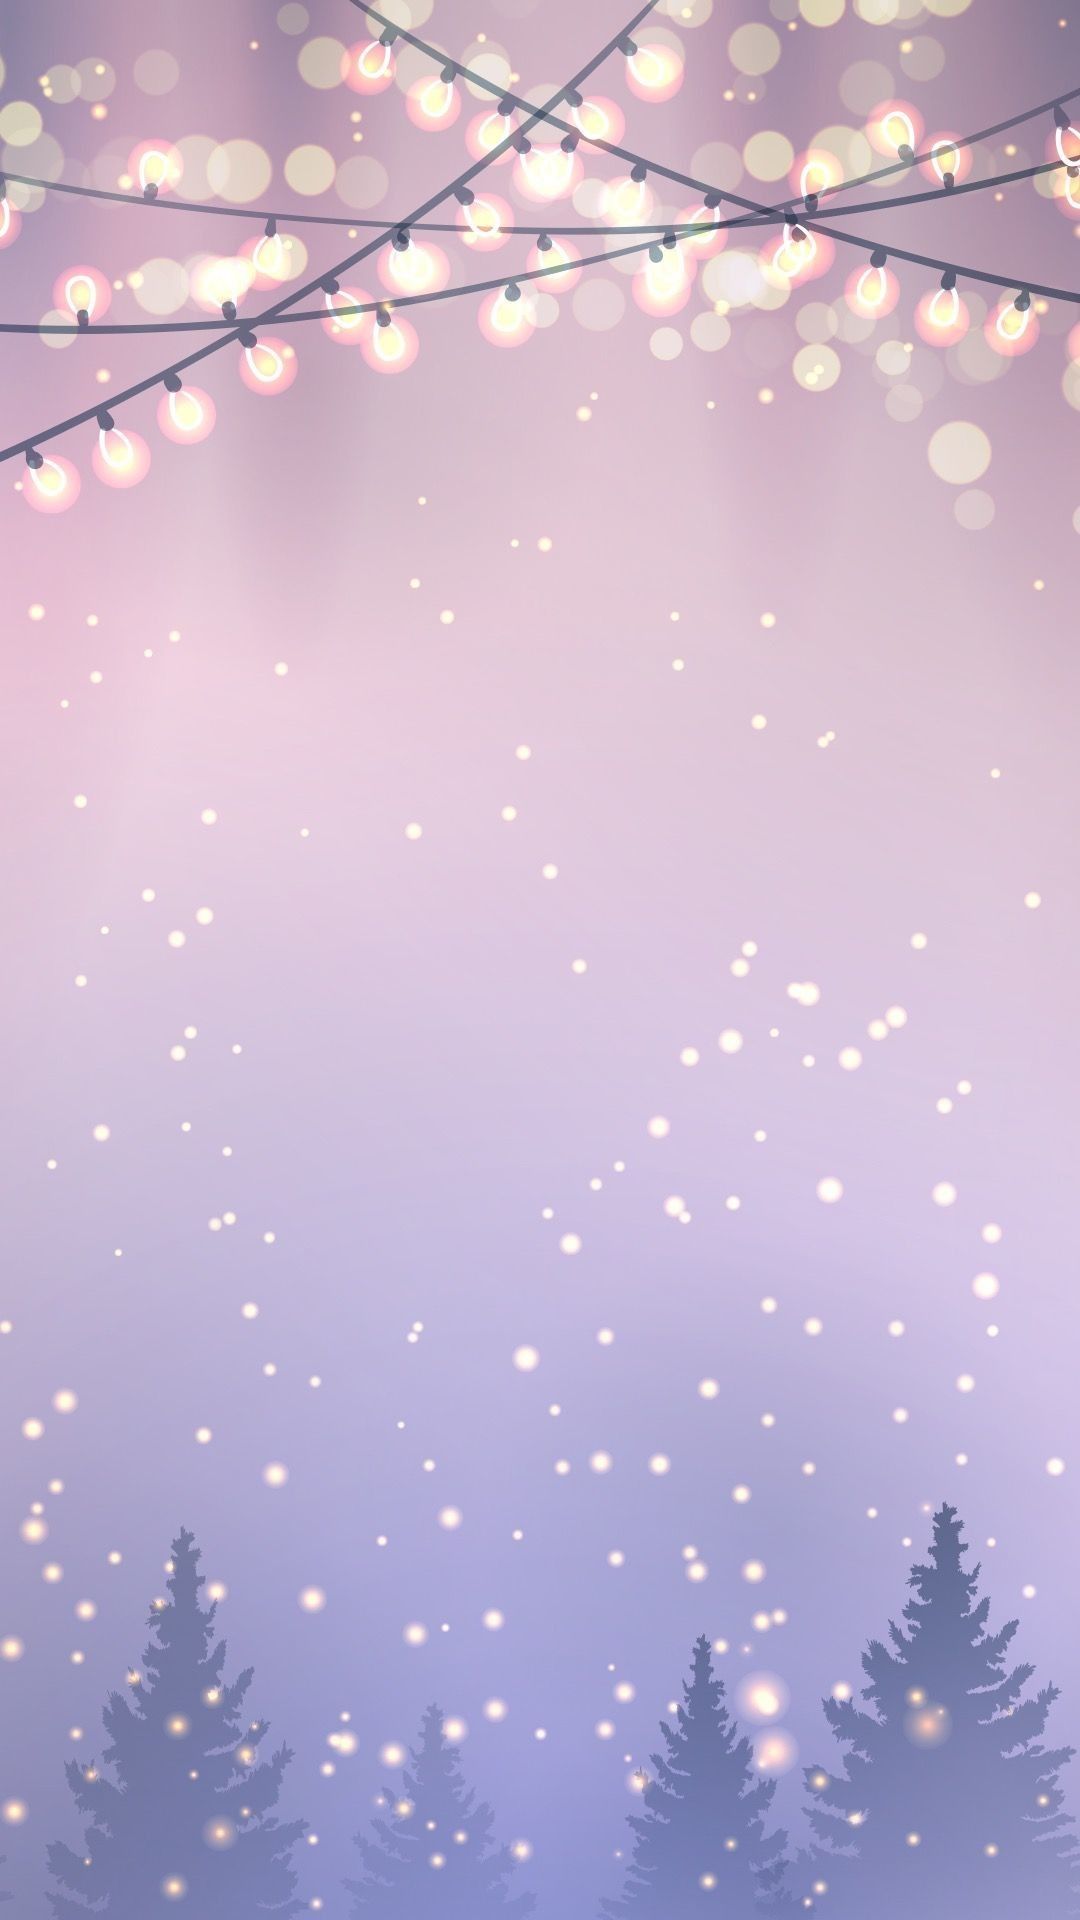 25+] Light Purple Christmas Wallpapers - WallpaperSafari